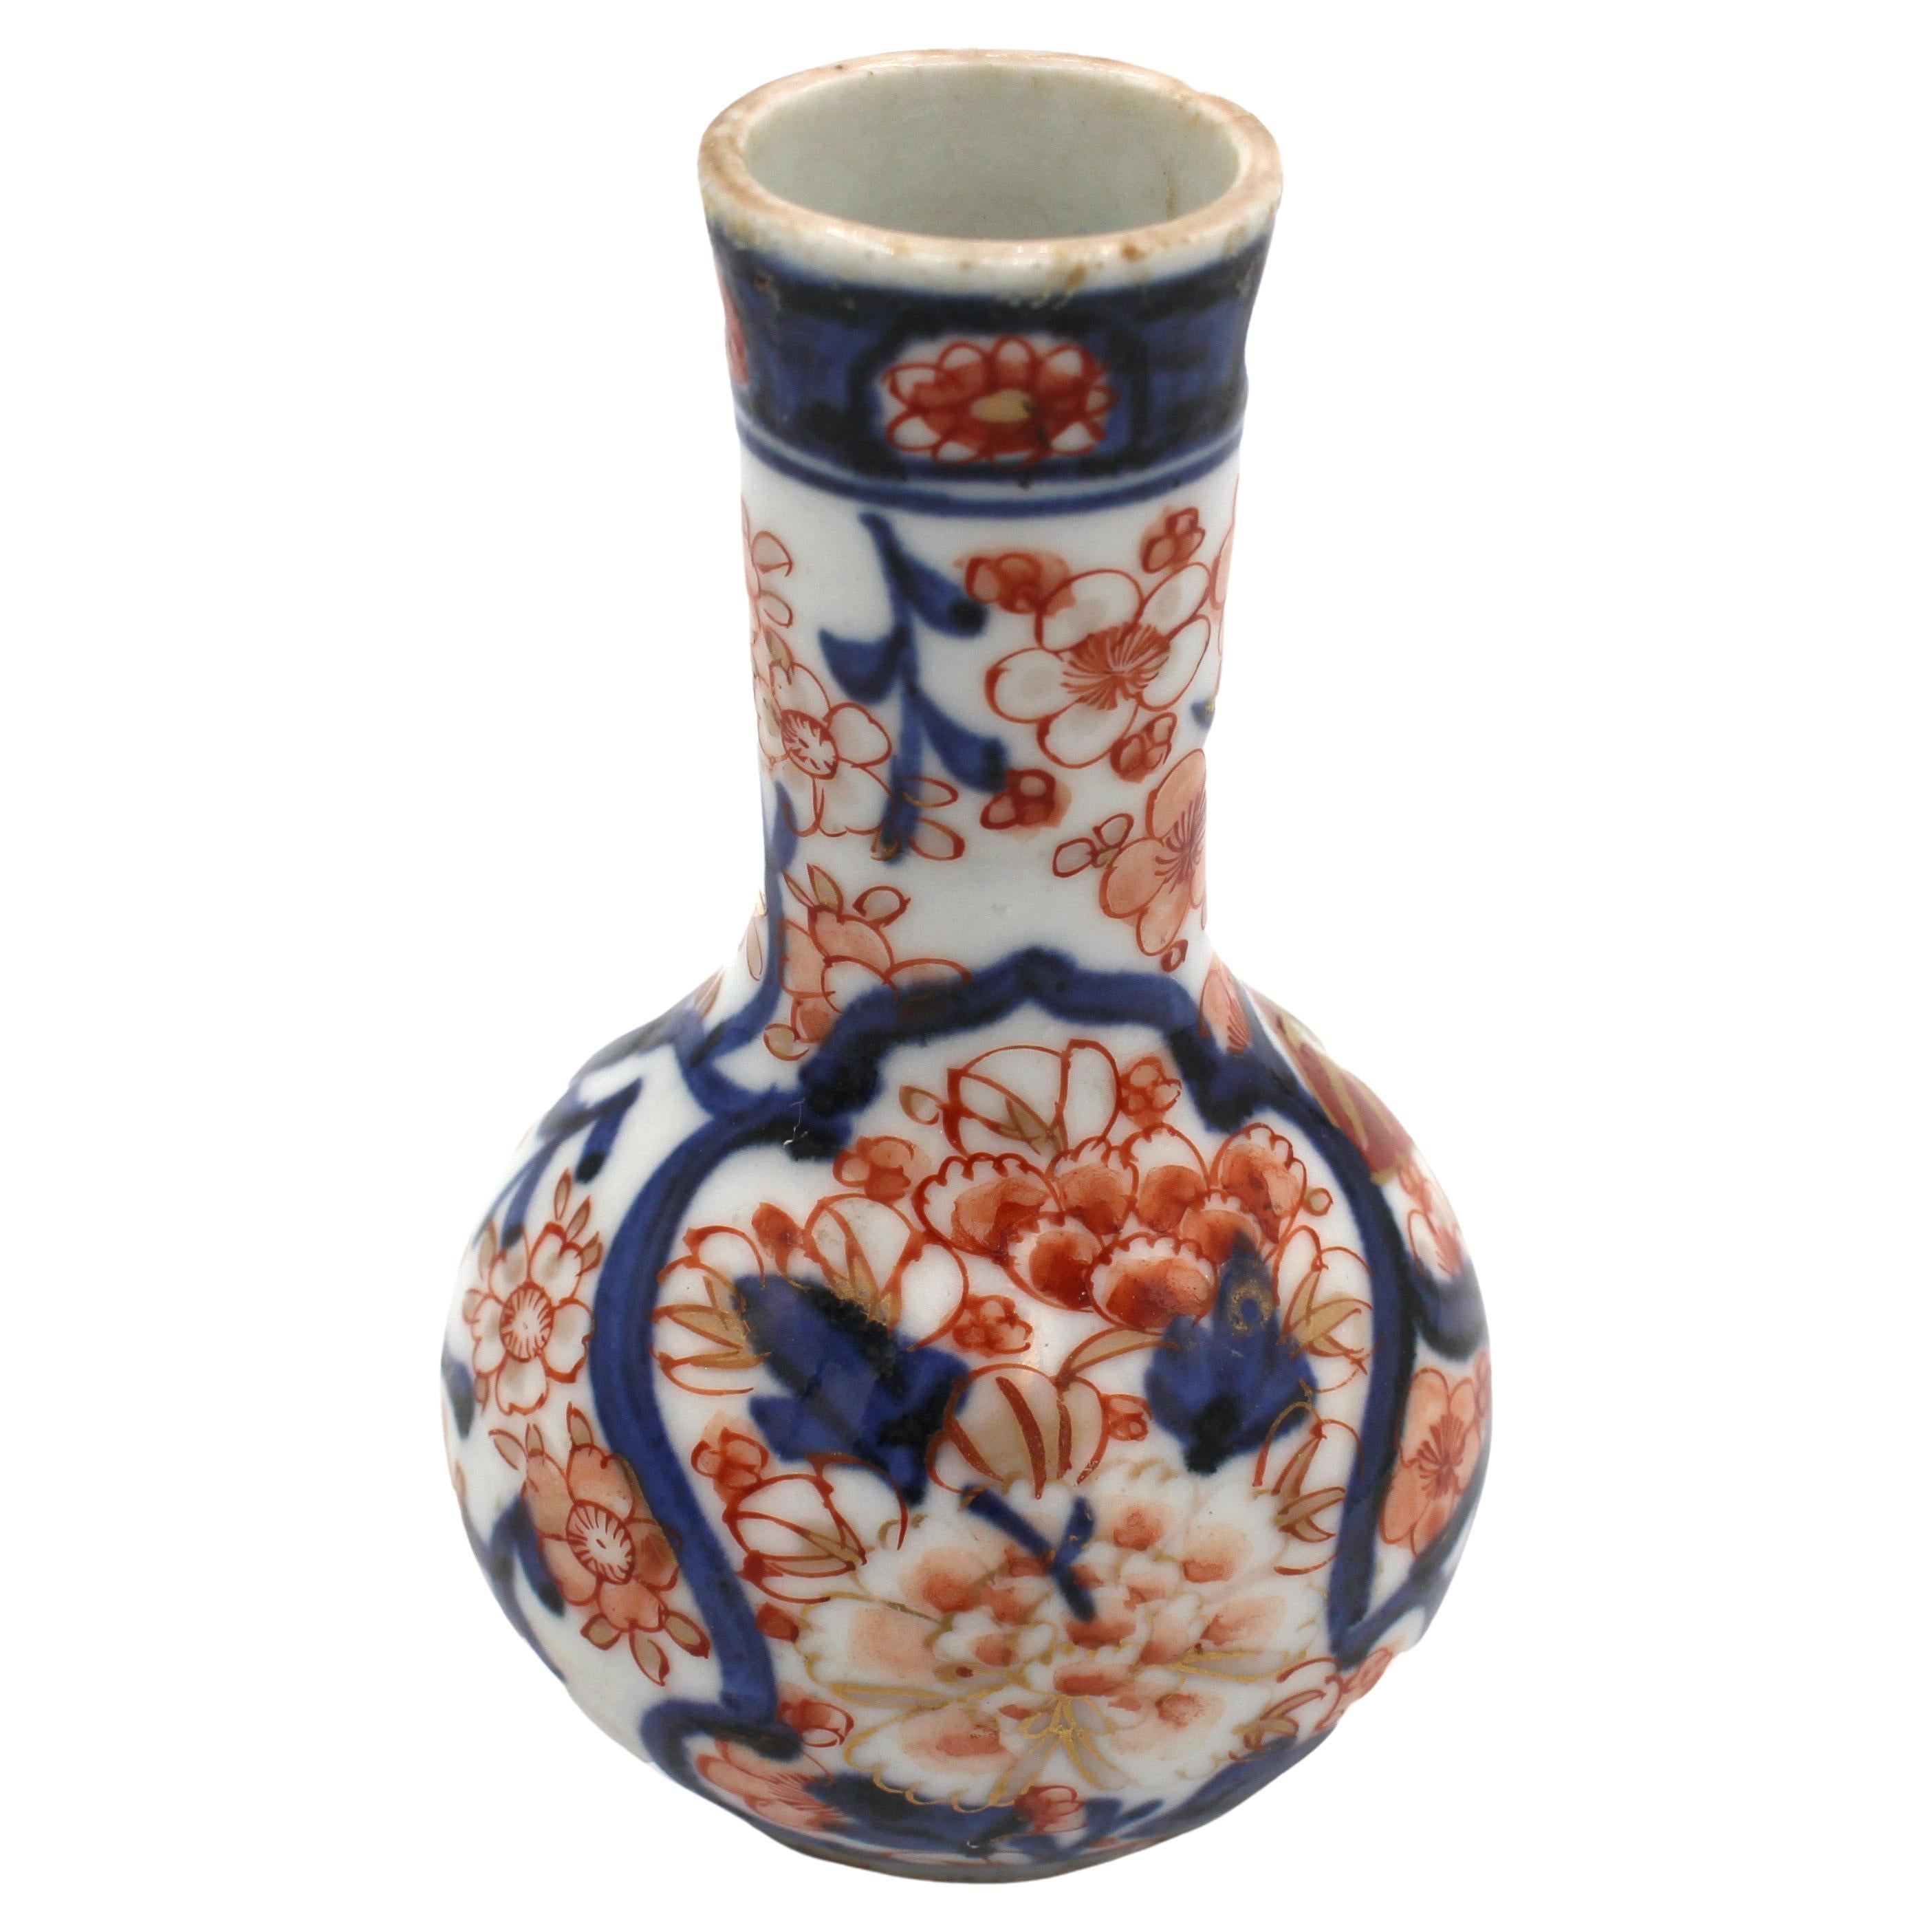 Late Meiji era, Circa 1870s Miniature Imari Vase, Japanese